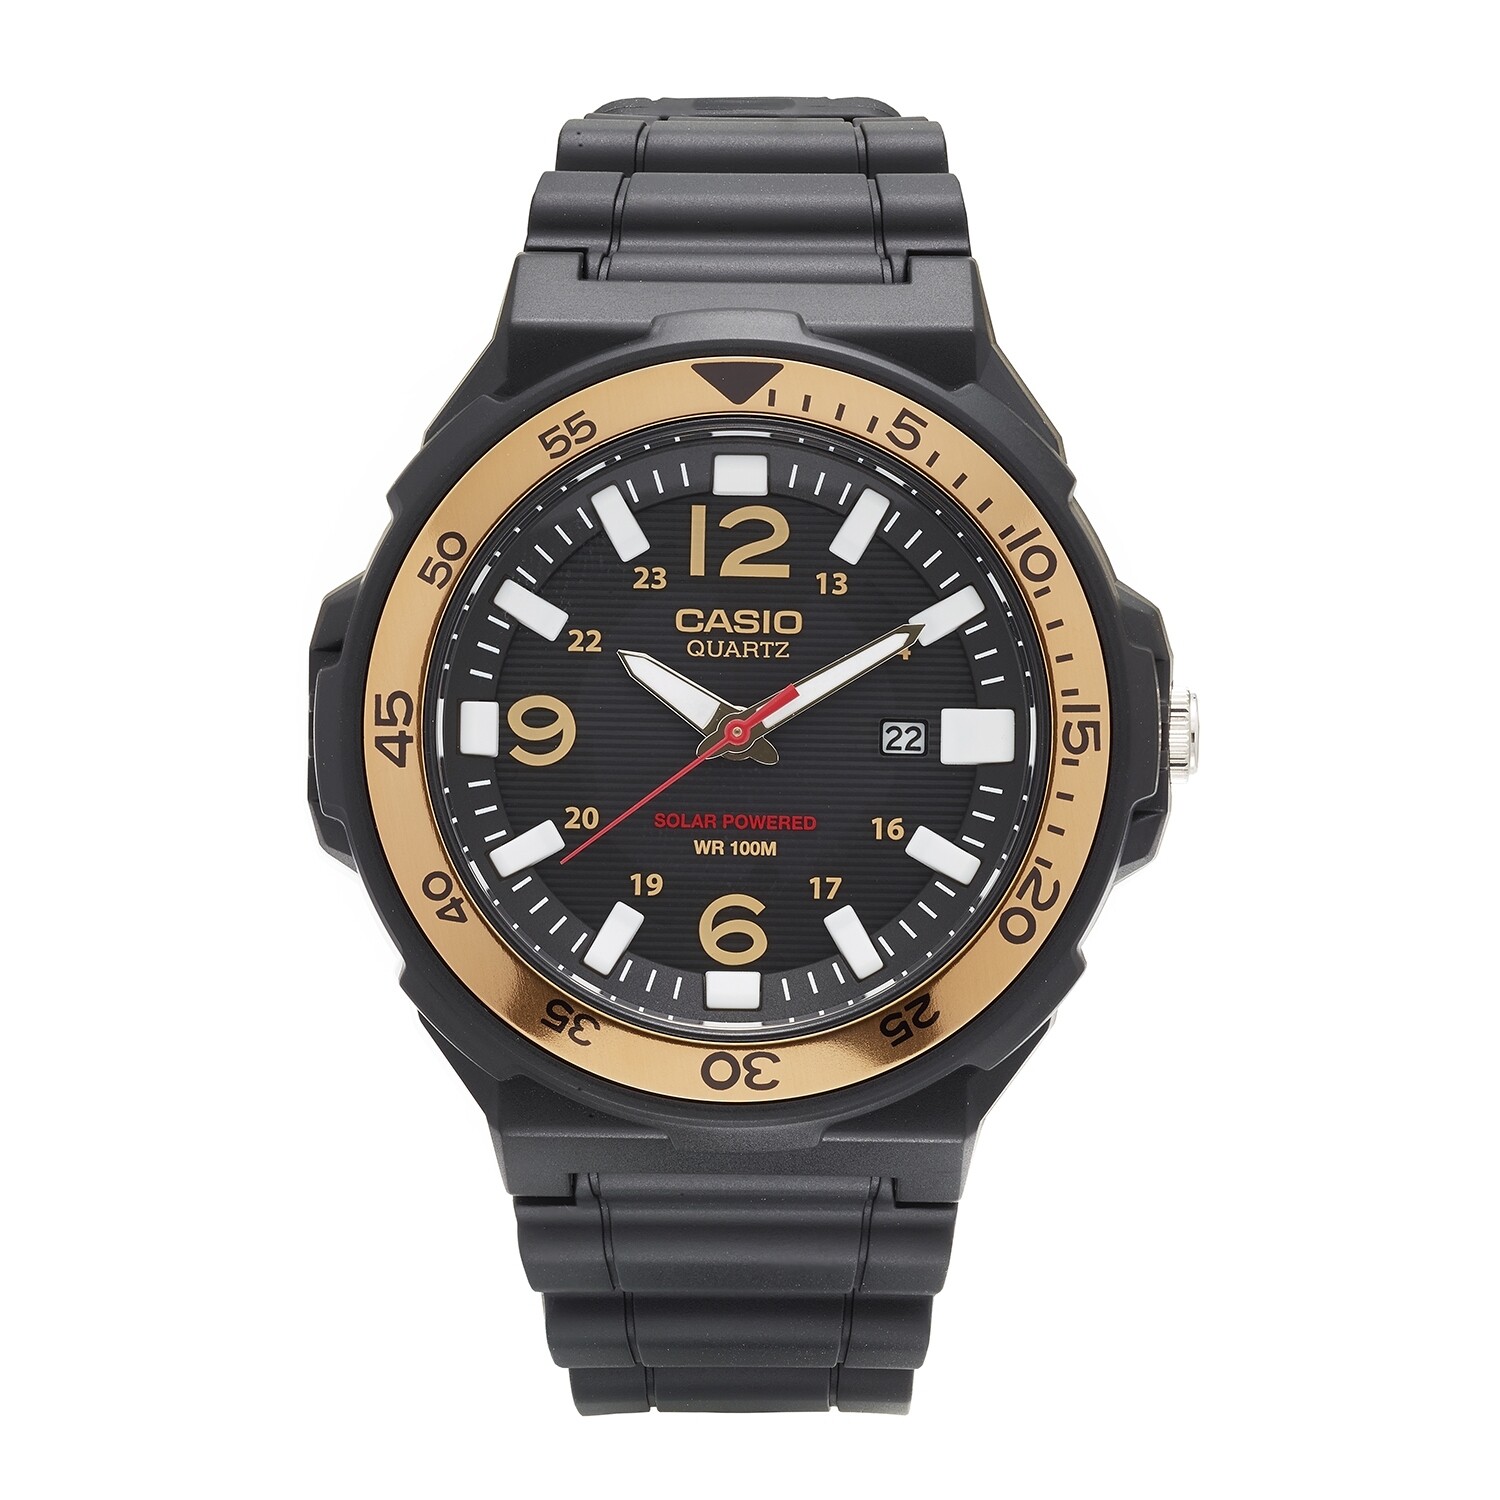 Casio Men's 'Solar Powered' Quartz Resin Watch, Color Black (Model: MRWS310H-9BV)